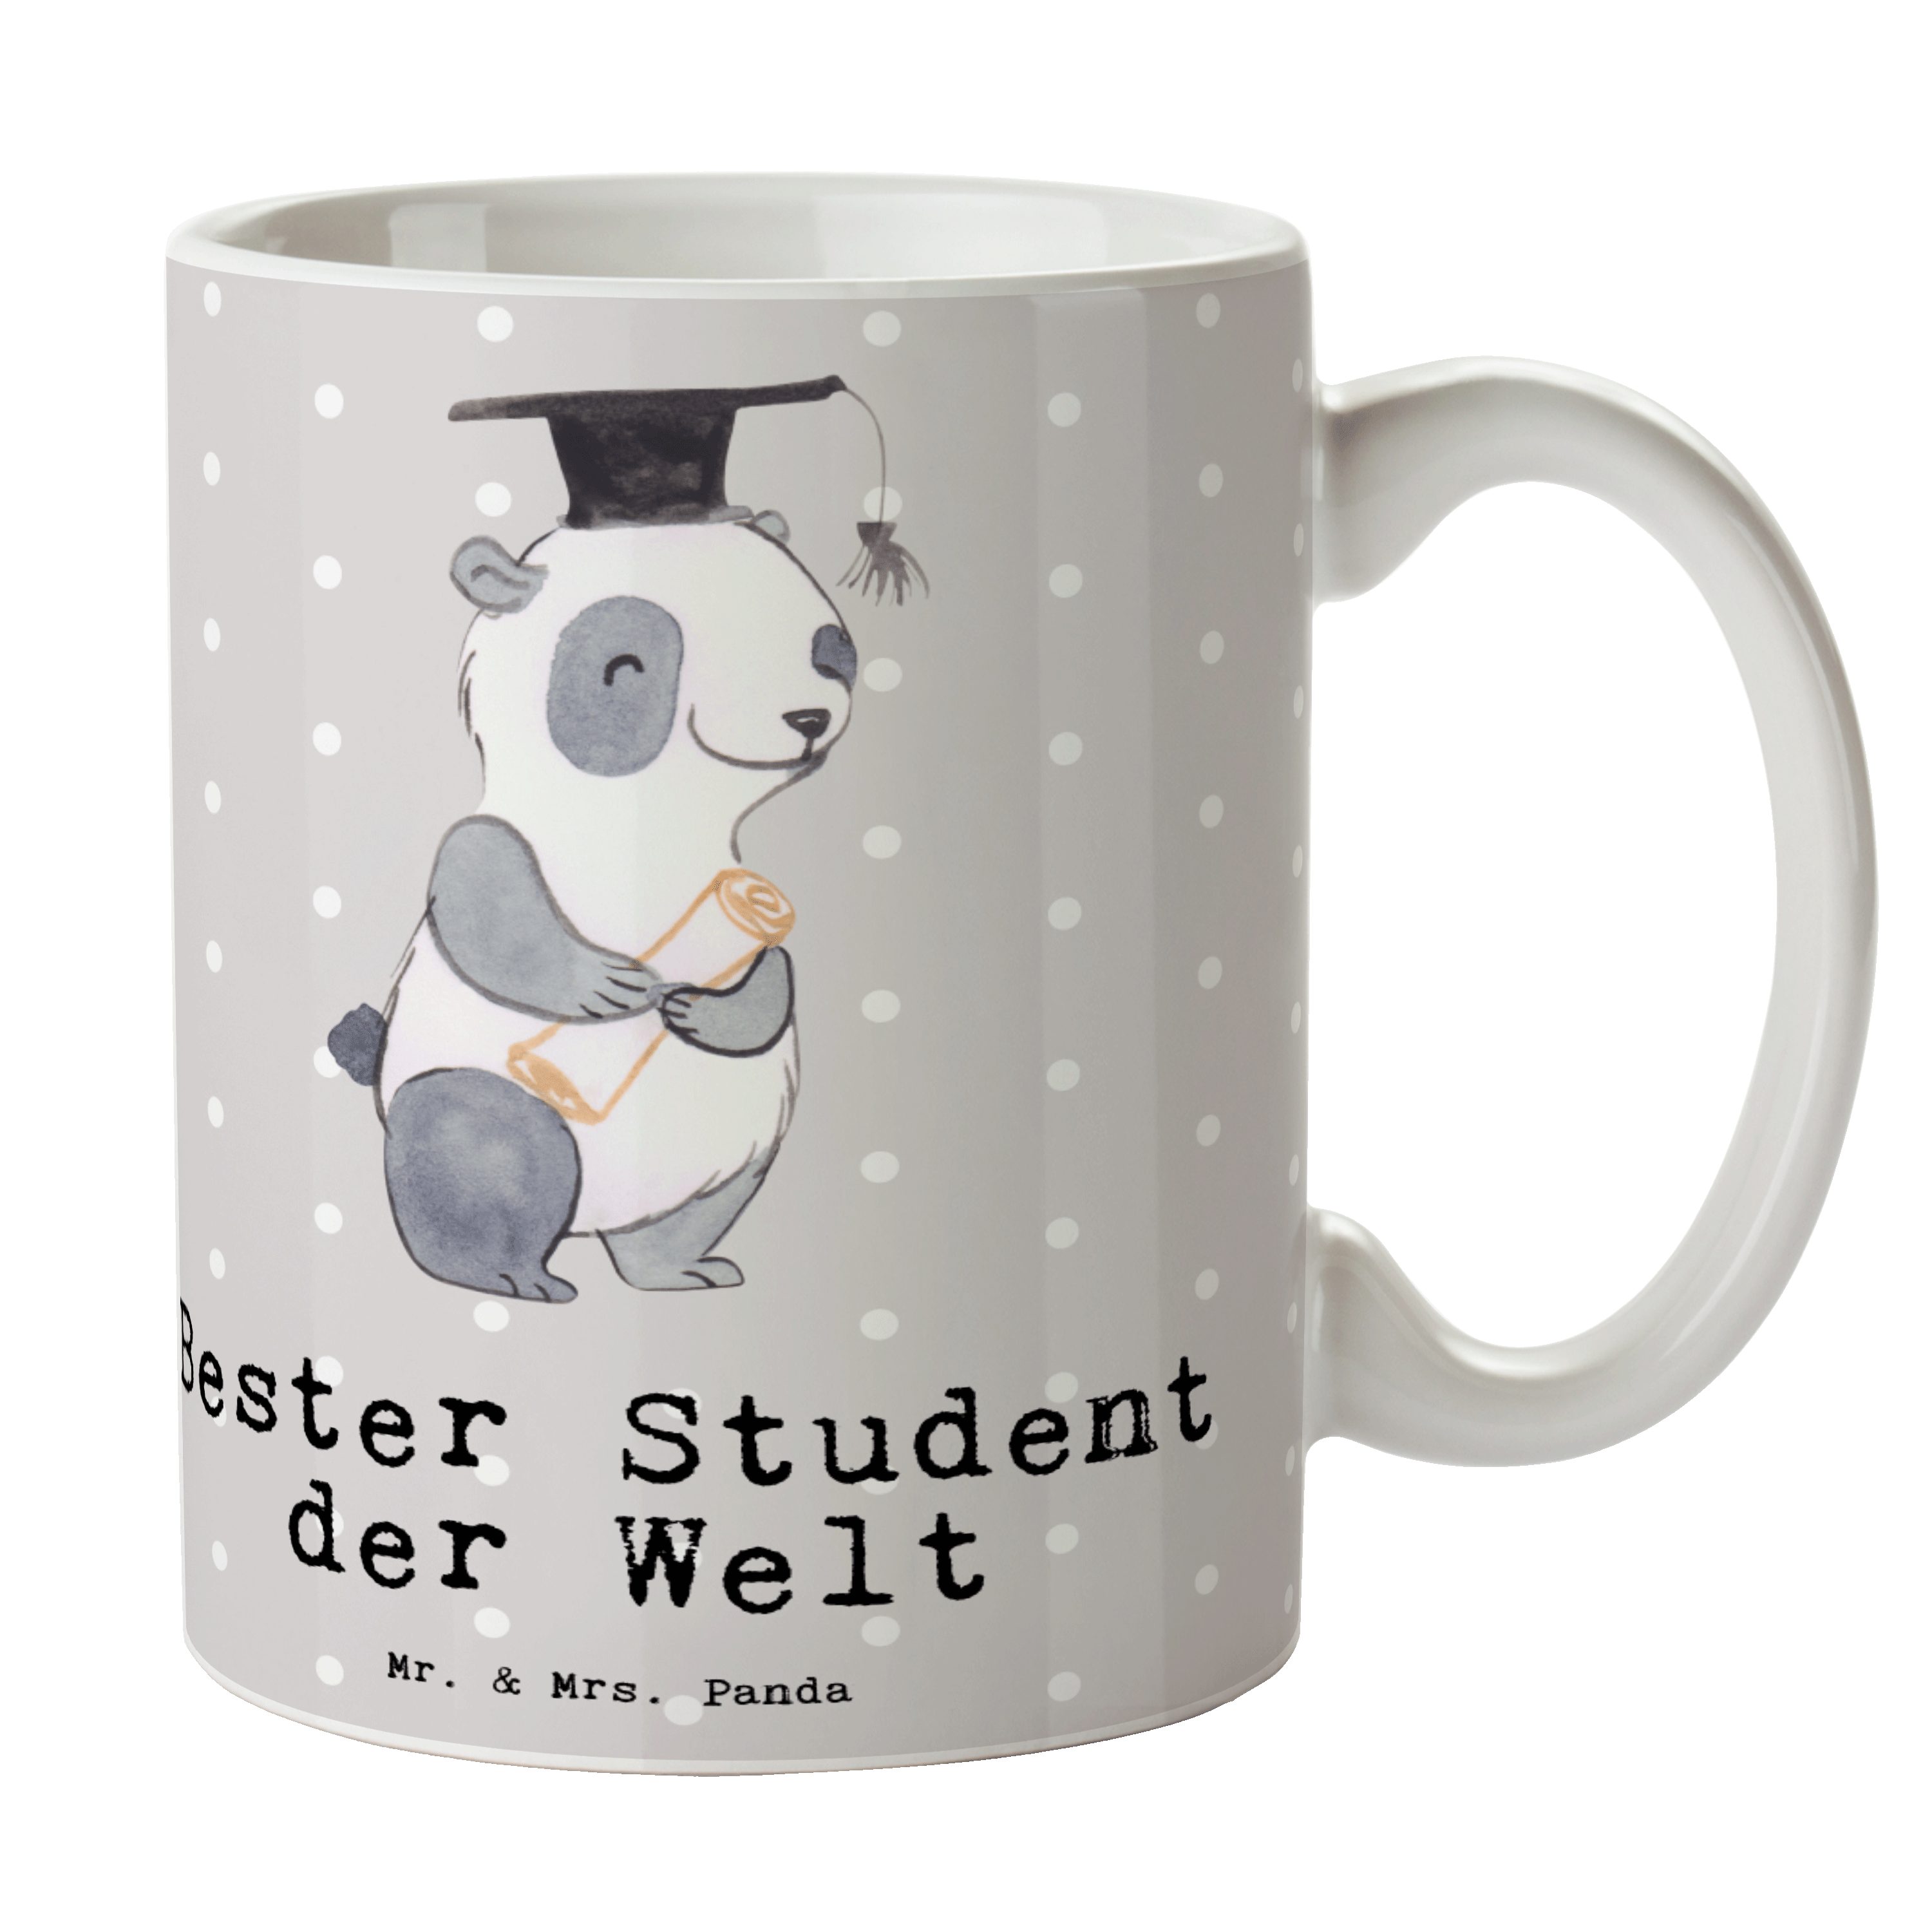 Mr. & Mrs. Panda Tasse Panda Bester Student der Welt - Grau Pastell - Geschenk, Tasse, Hochs, Keramik